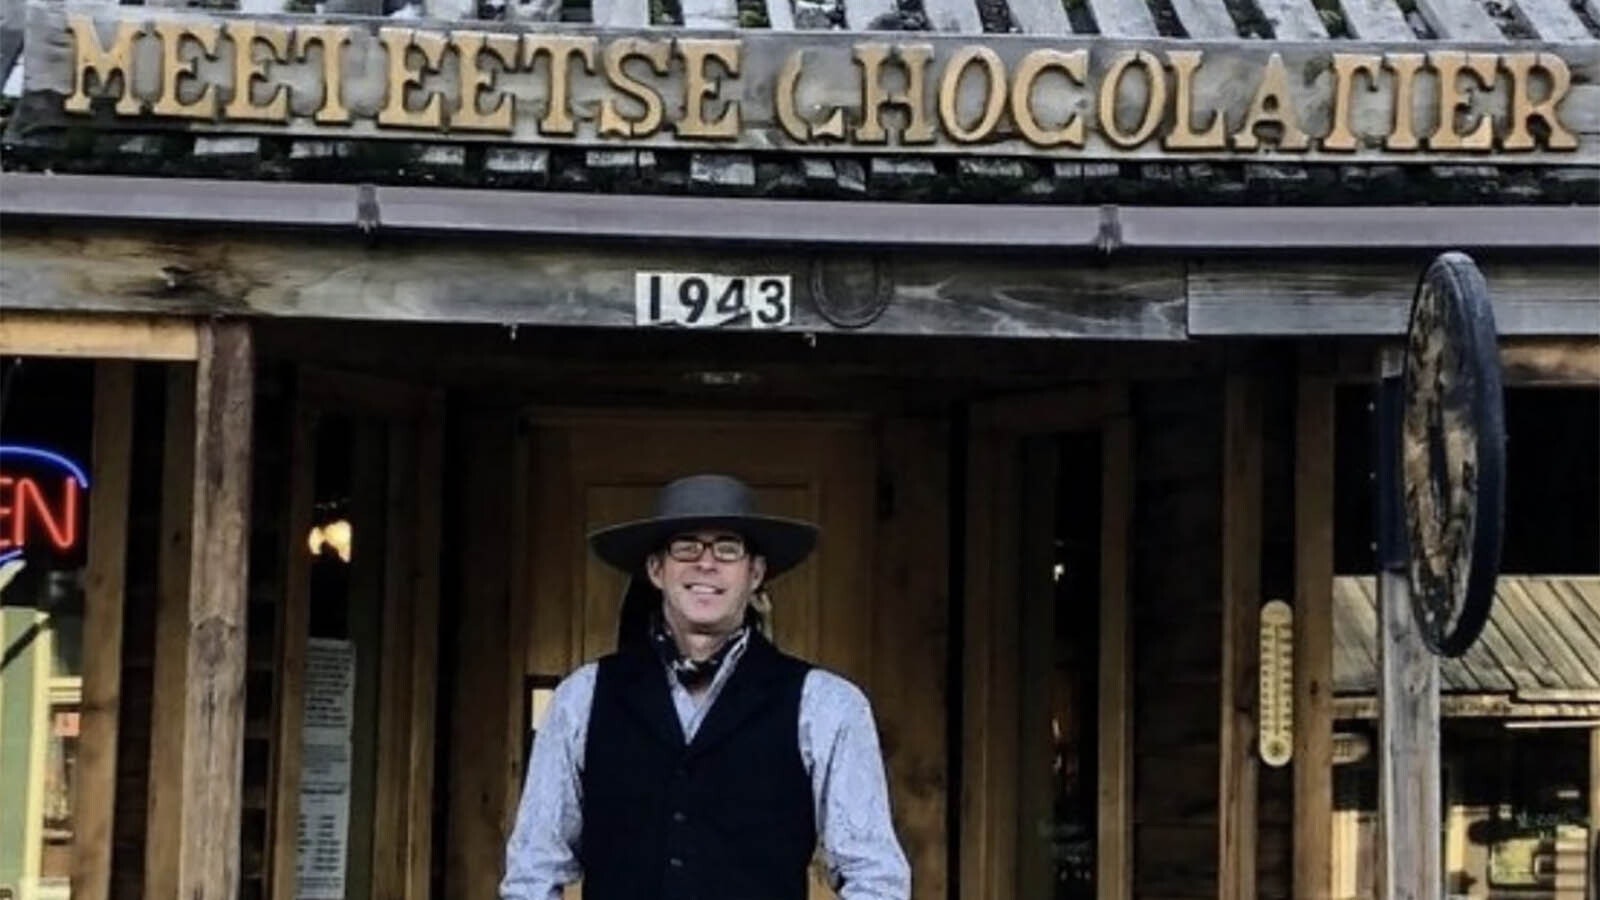 Tim Kellogg, aka the Meeteetse Chocolatier, outside his Wyoming shop.